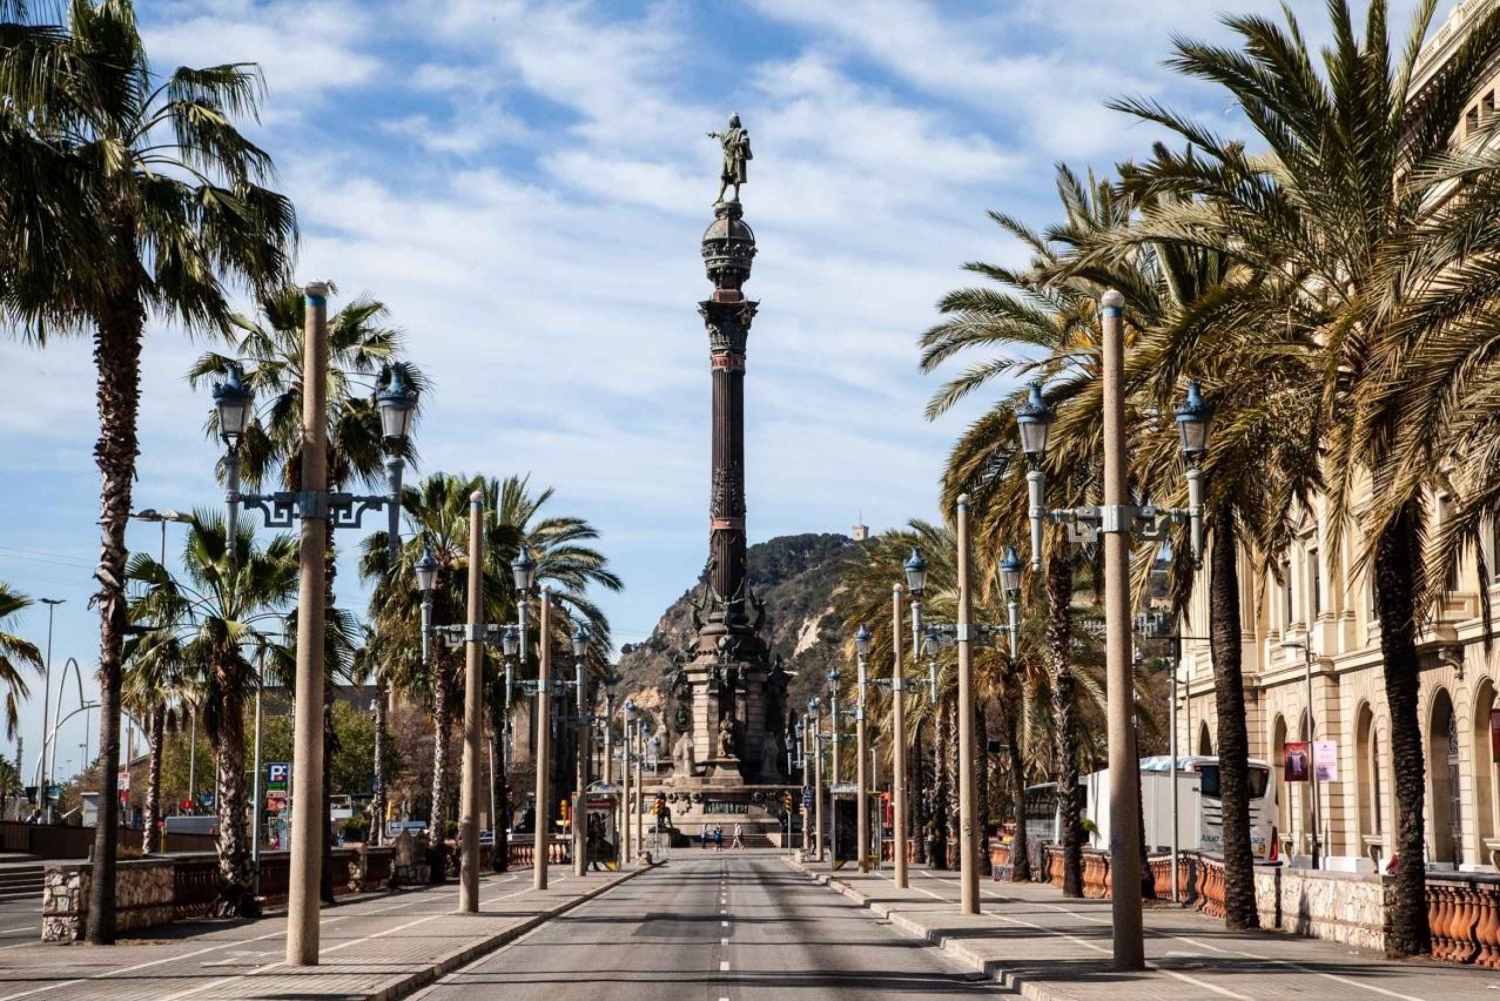 Hafen- und Meerestour in Barcelona mit Kolumbus-Denkmal